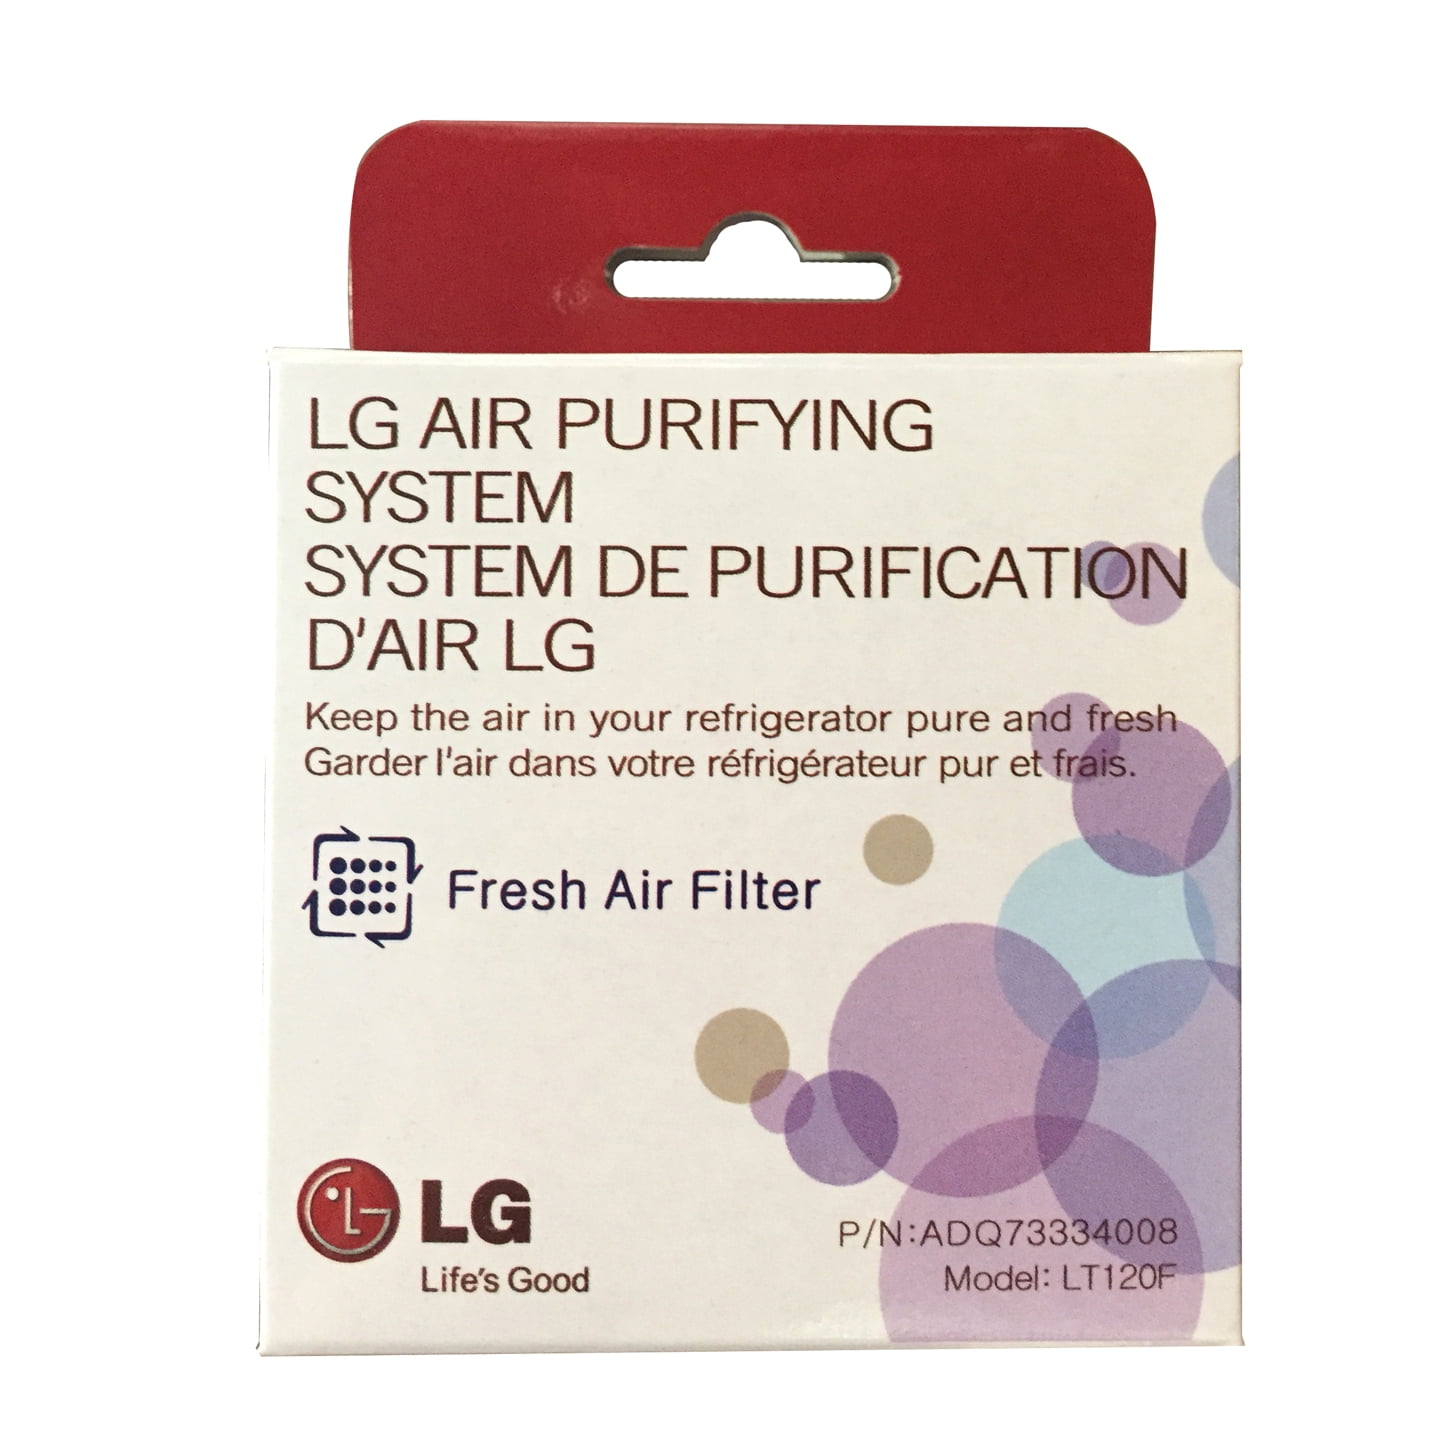 LG LT120F ADQ73214404 Fresh Air Replacement Refrigerator Air Filter 2 Pack 